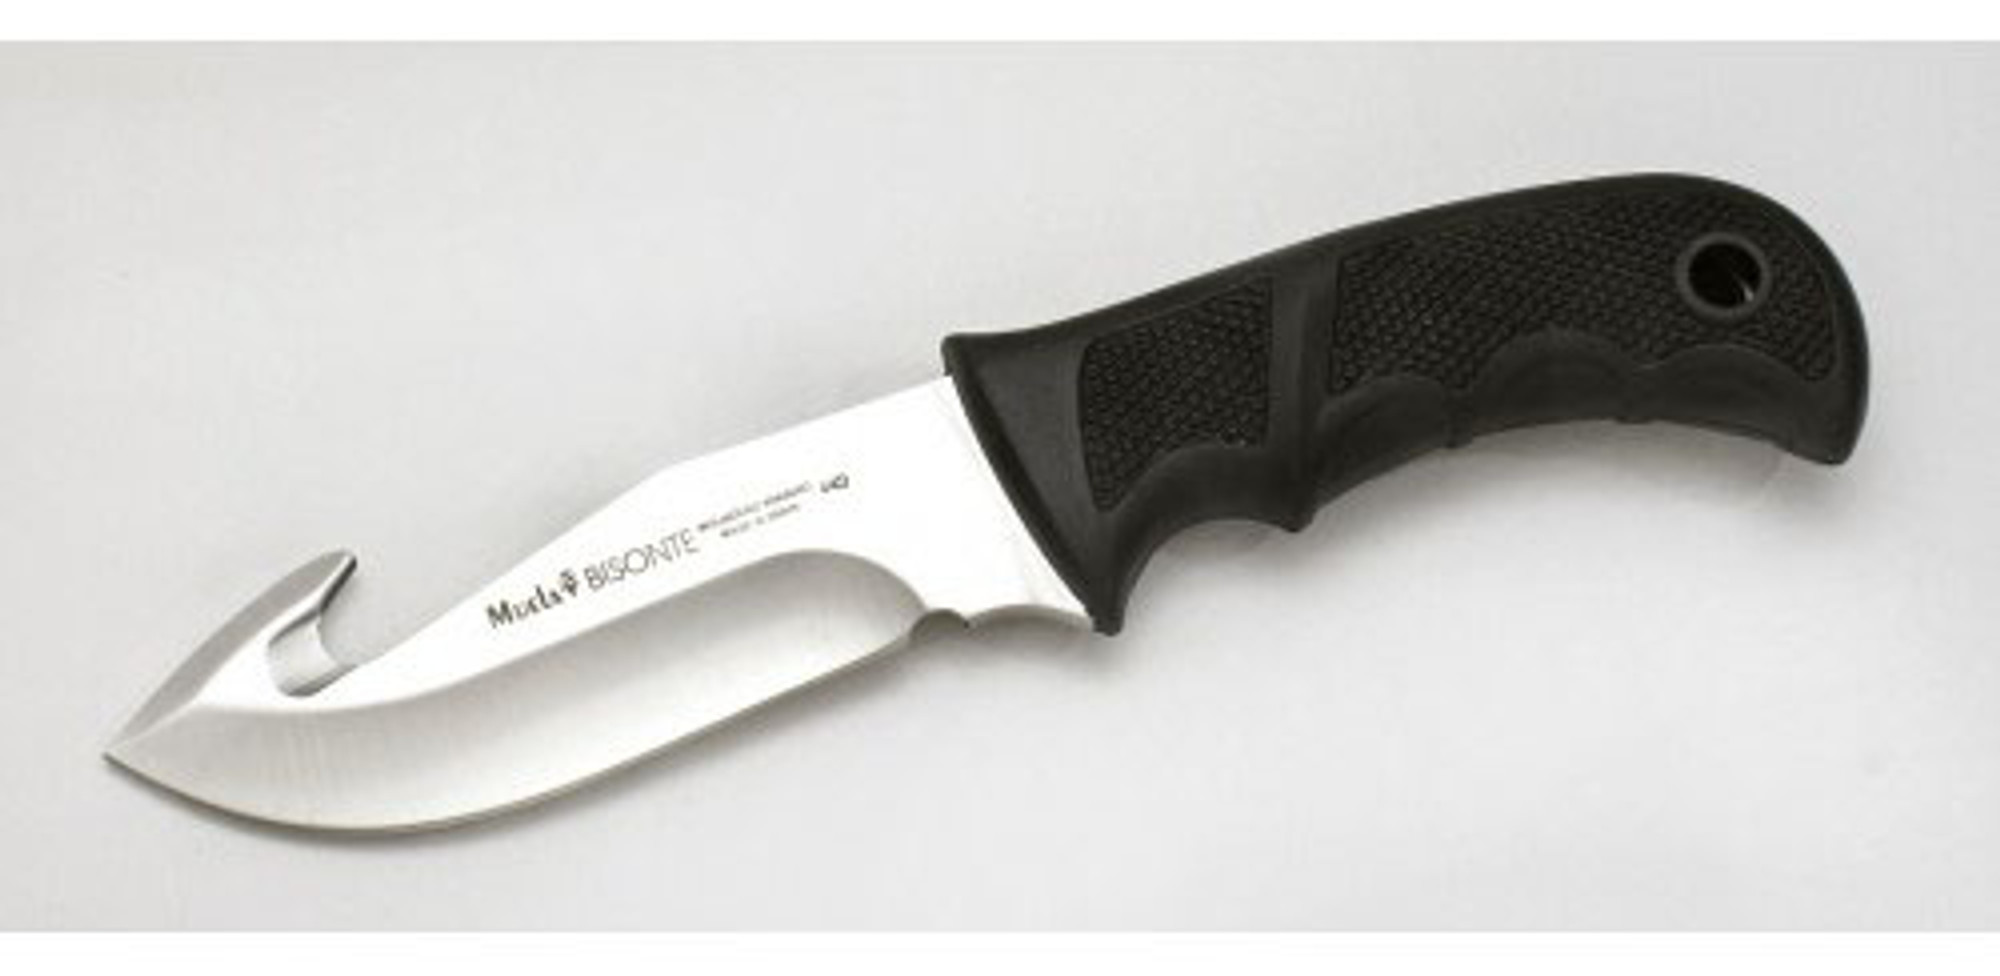 MUELA BISONTE-11G, X50CrMoV15, 4-1/2" Fixed Blade Hunting Knife, Polymer Handle